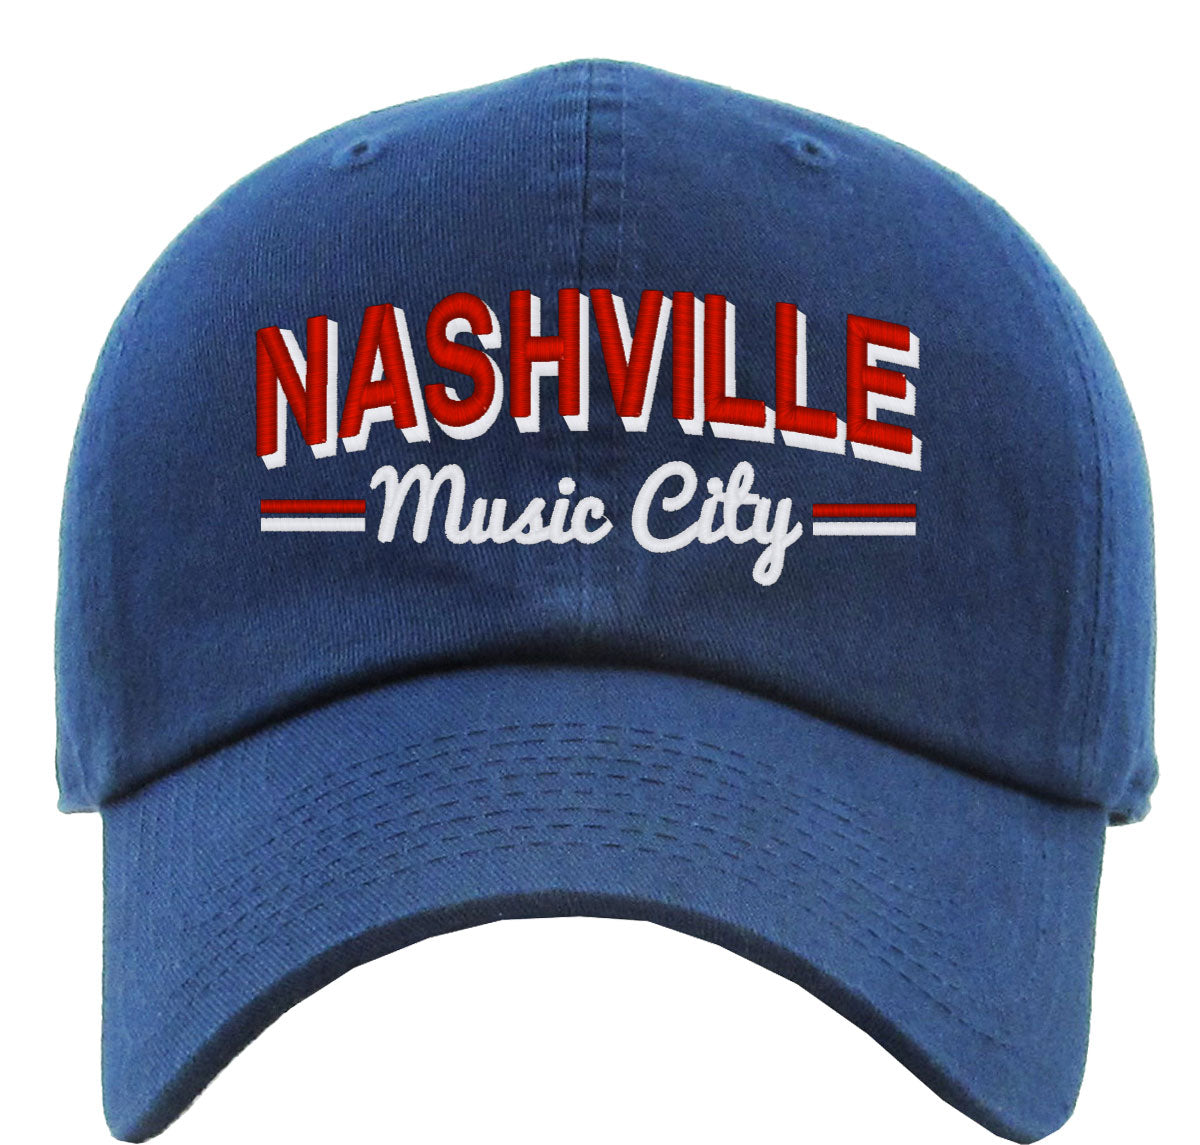 Nashville Music City Premium Baseball Cap